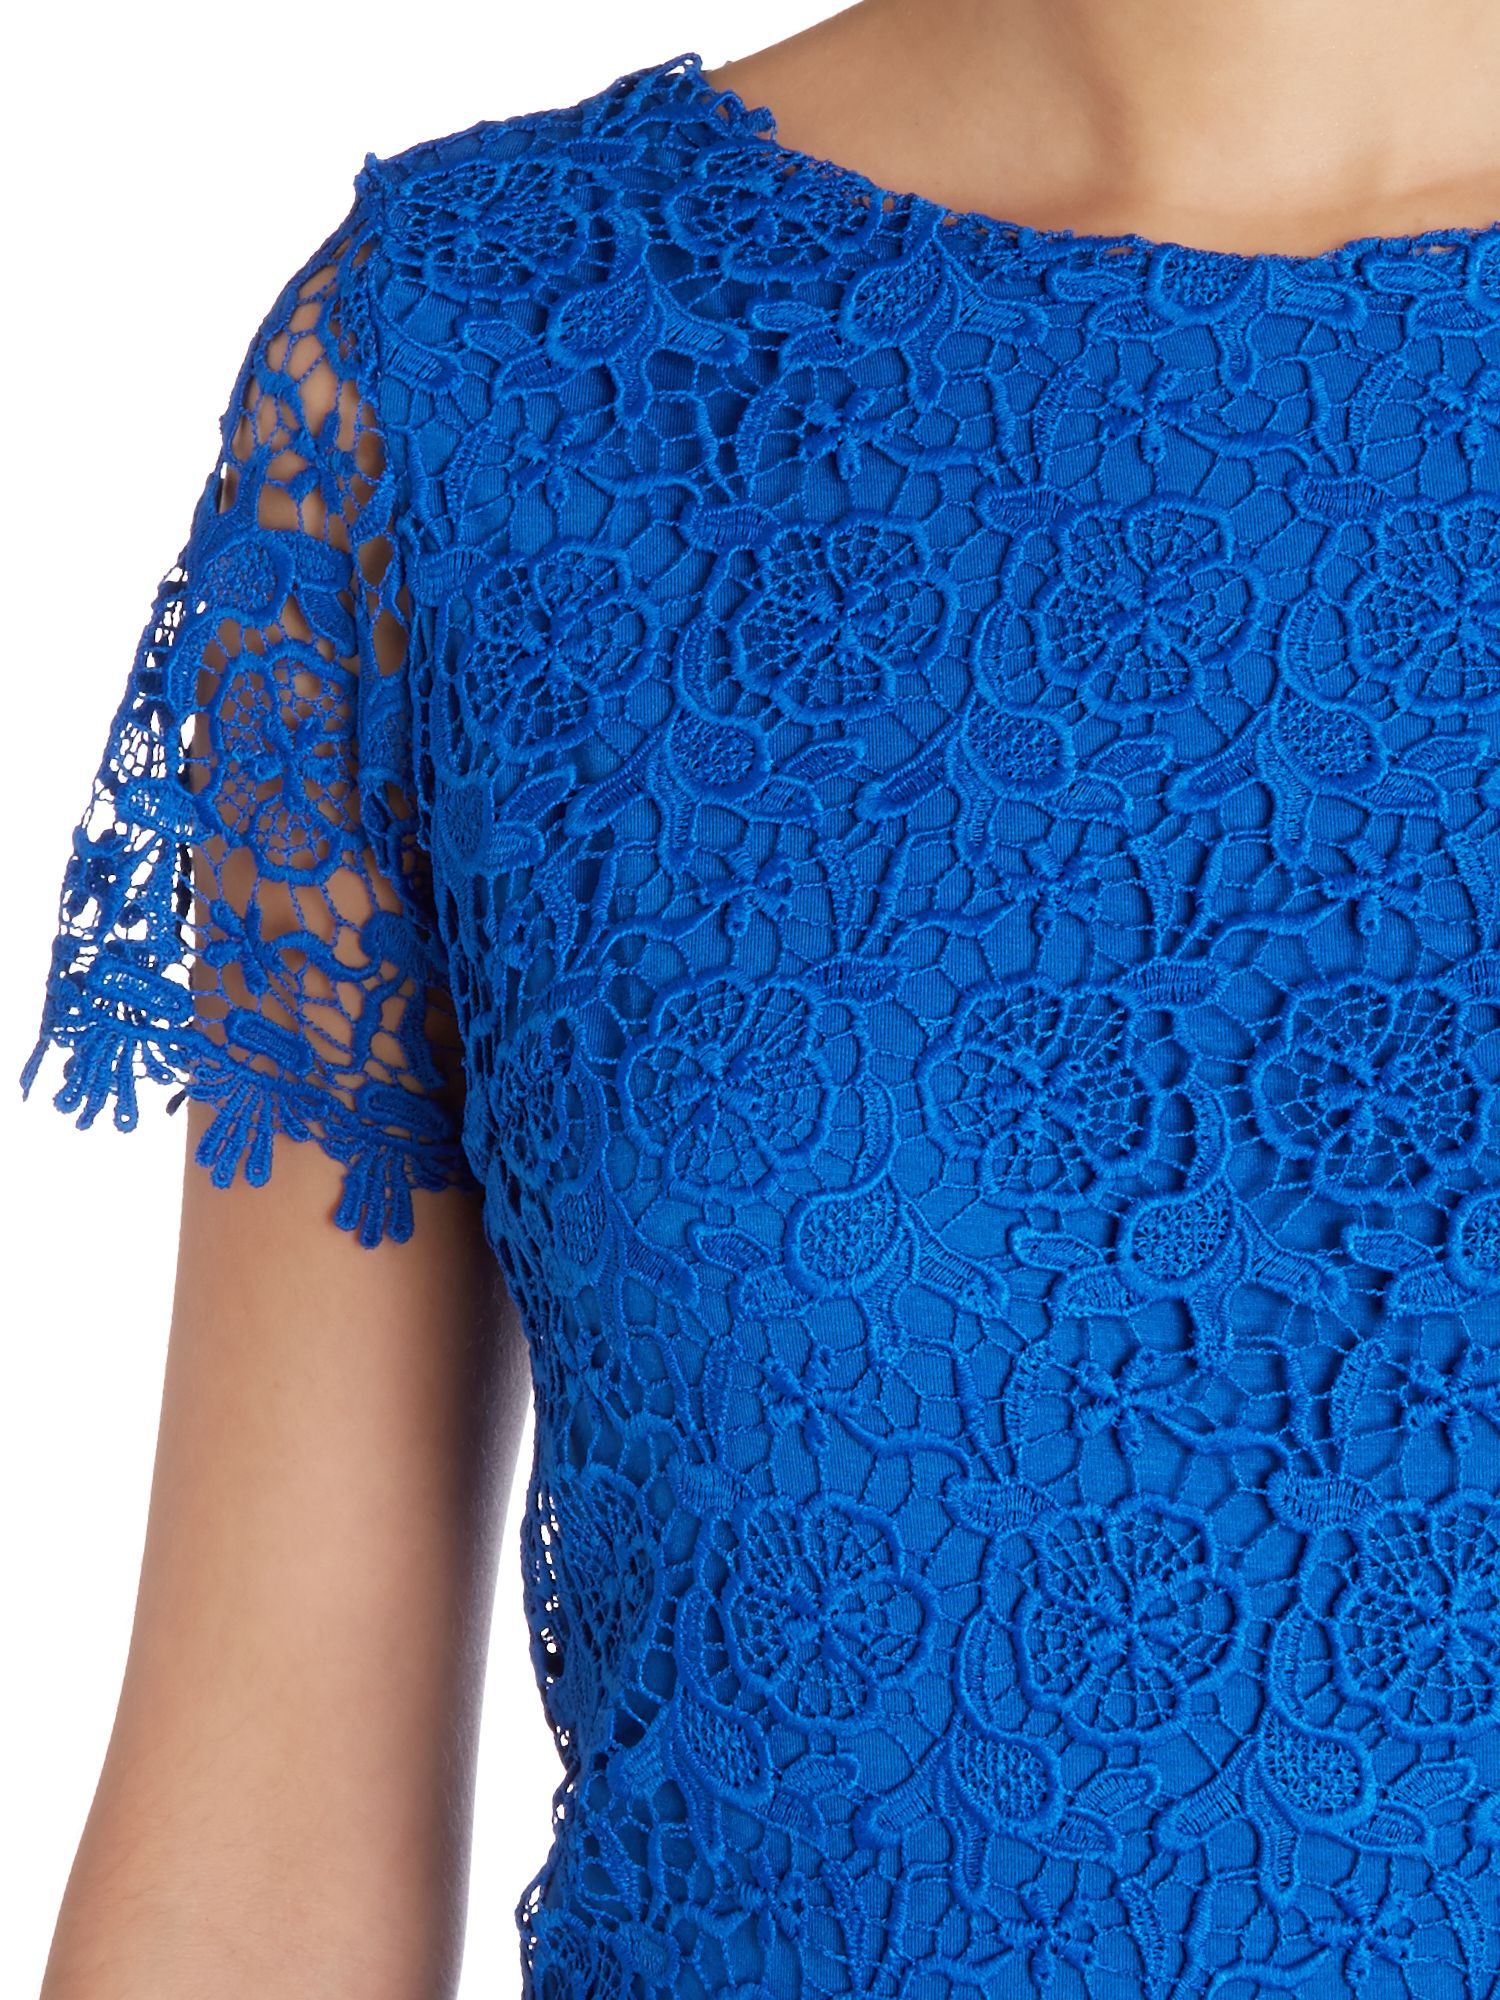 John zack Ss Lace Midi Dress in Blue | Lyst